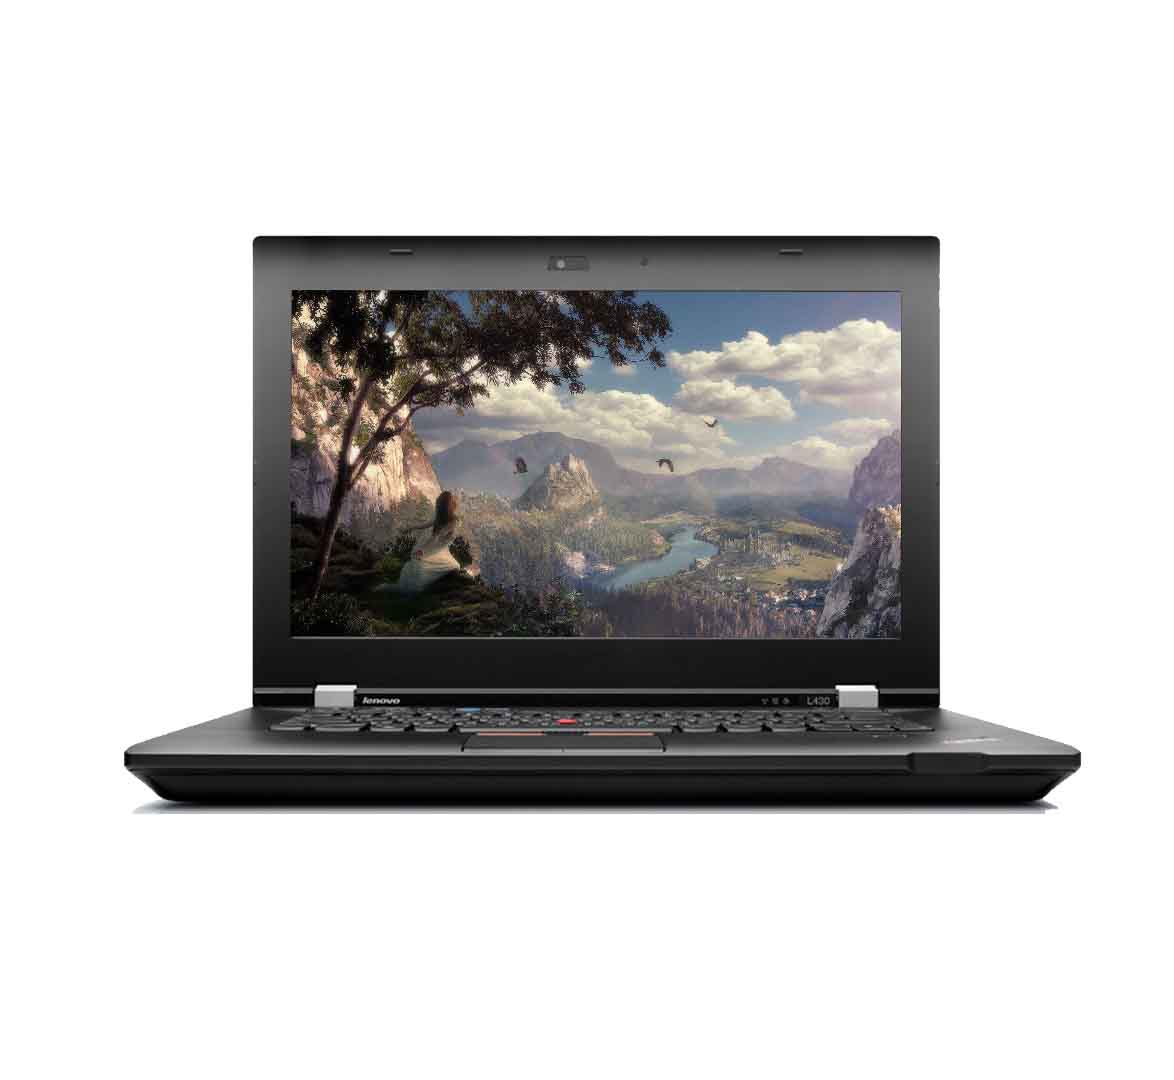 Lenovo ThinkPad L430 Business Laptop, Intel Core i5-3rd Generation CPU, 8GB RAM, 500GB HDD, 14 inch Display, Windows 10 Pro, Refurbished Laptop